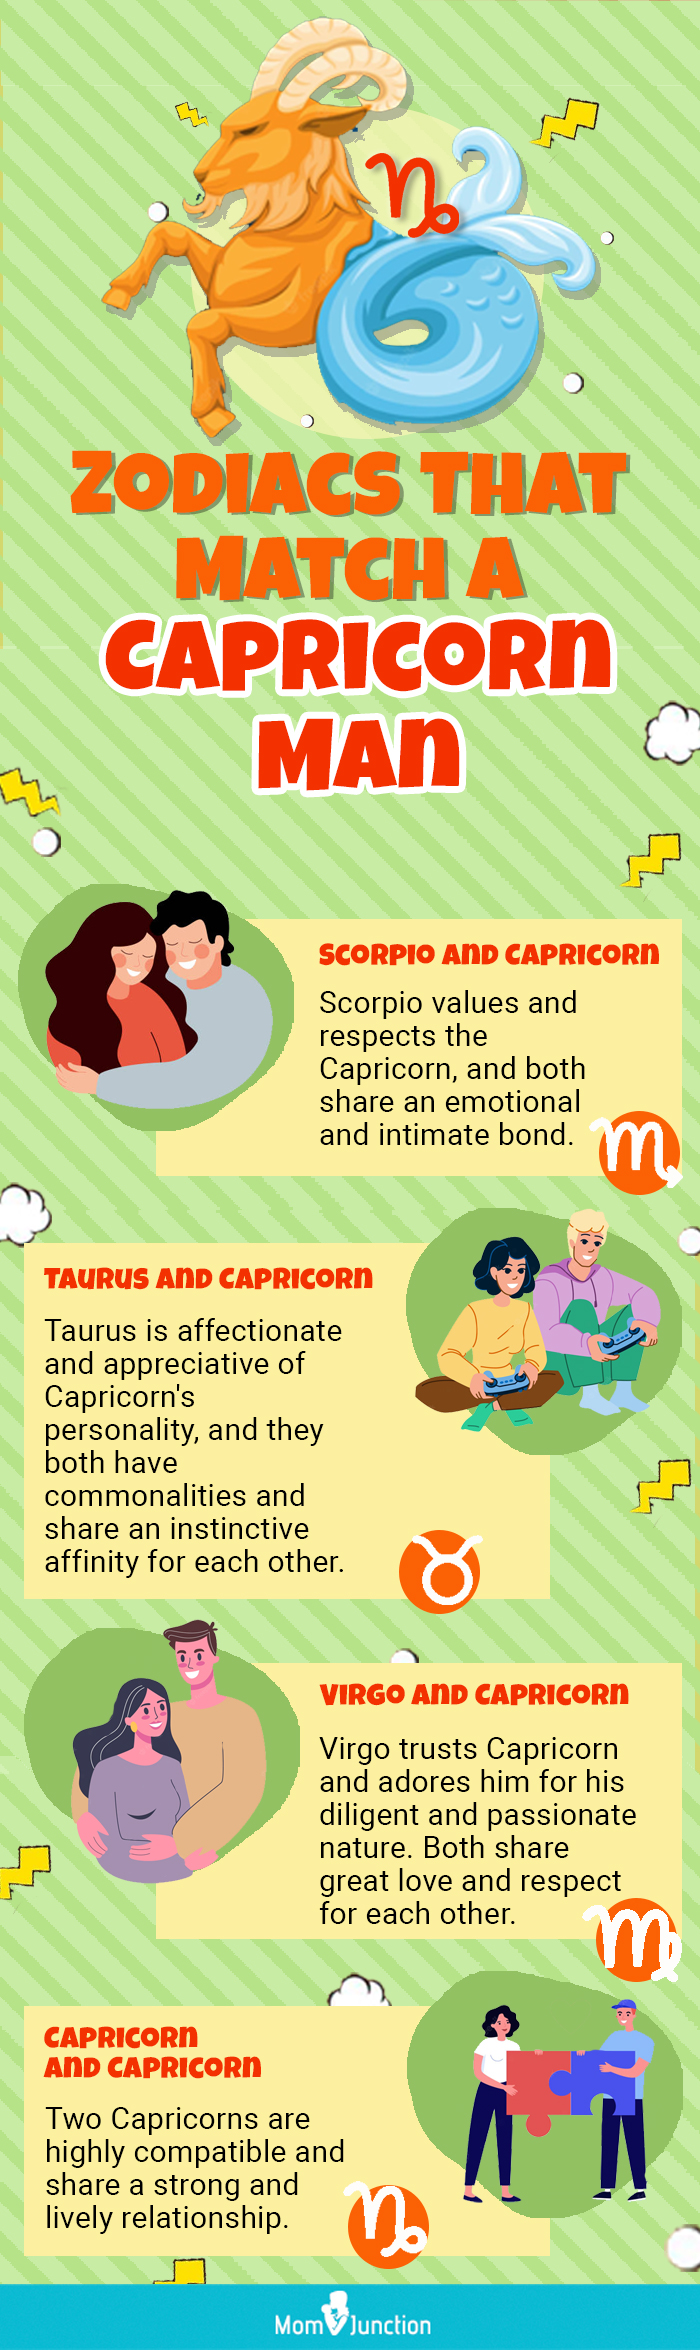 zodiacs that match a capricorn man [infographic]